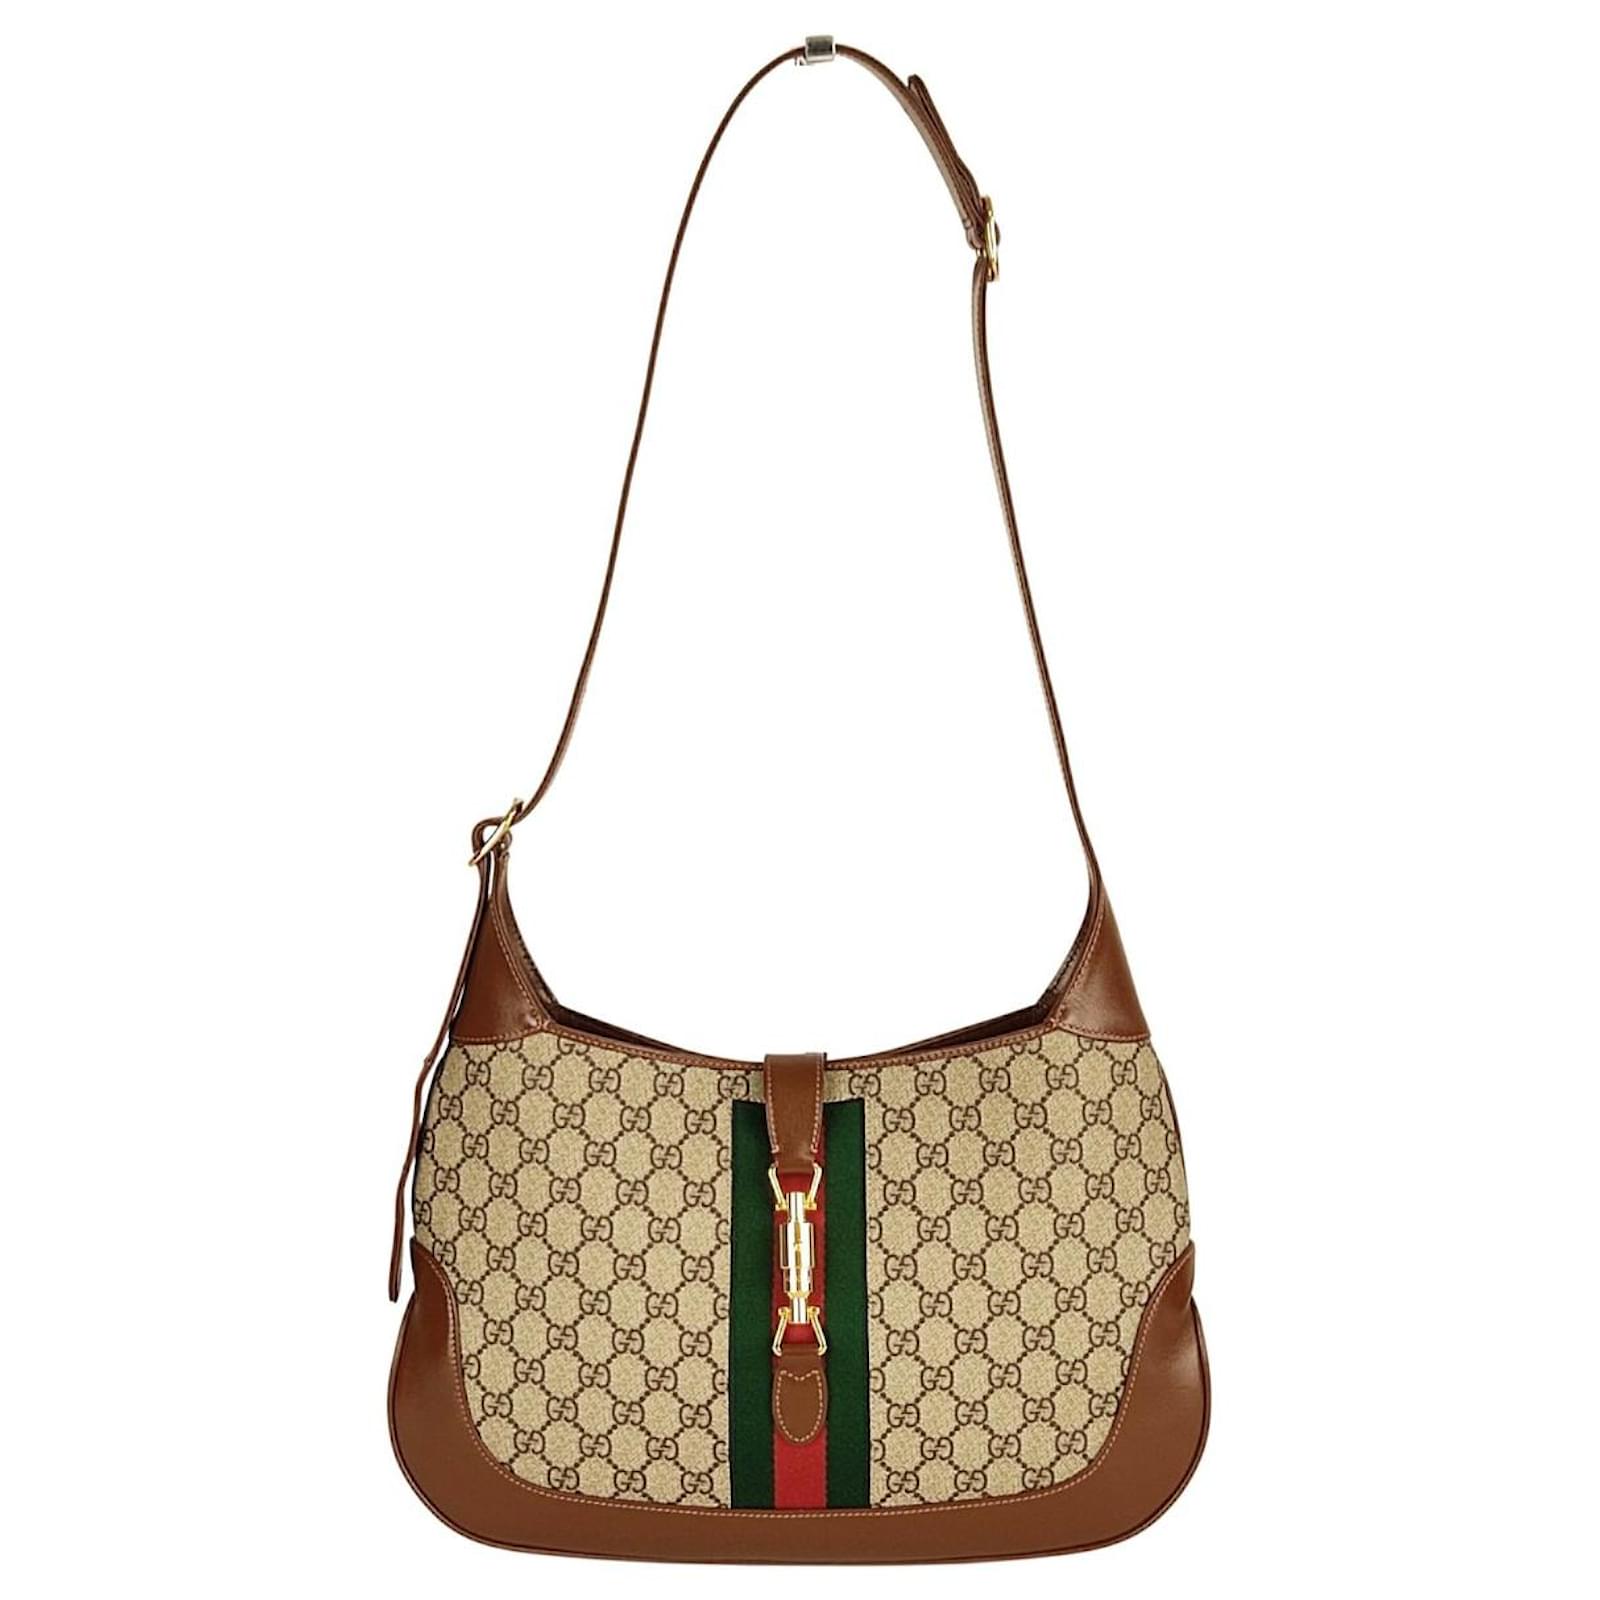 Gucci Jackie 1961 - Tote bag for Man - Beige - 758684FACIP-8747